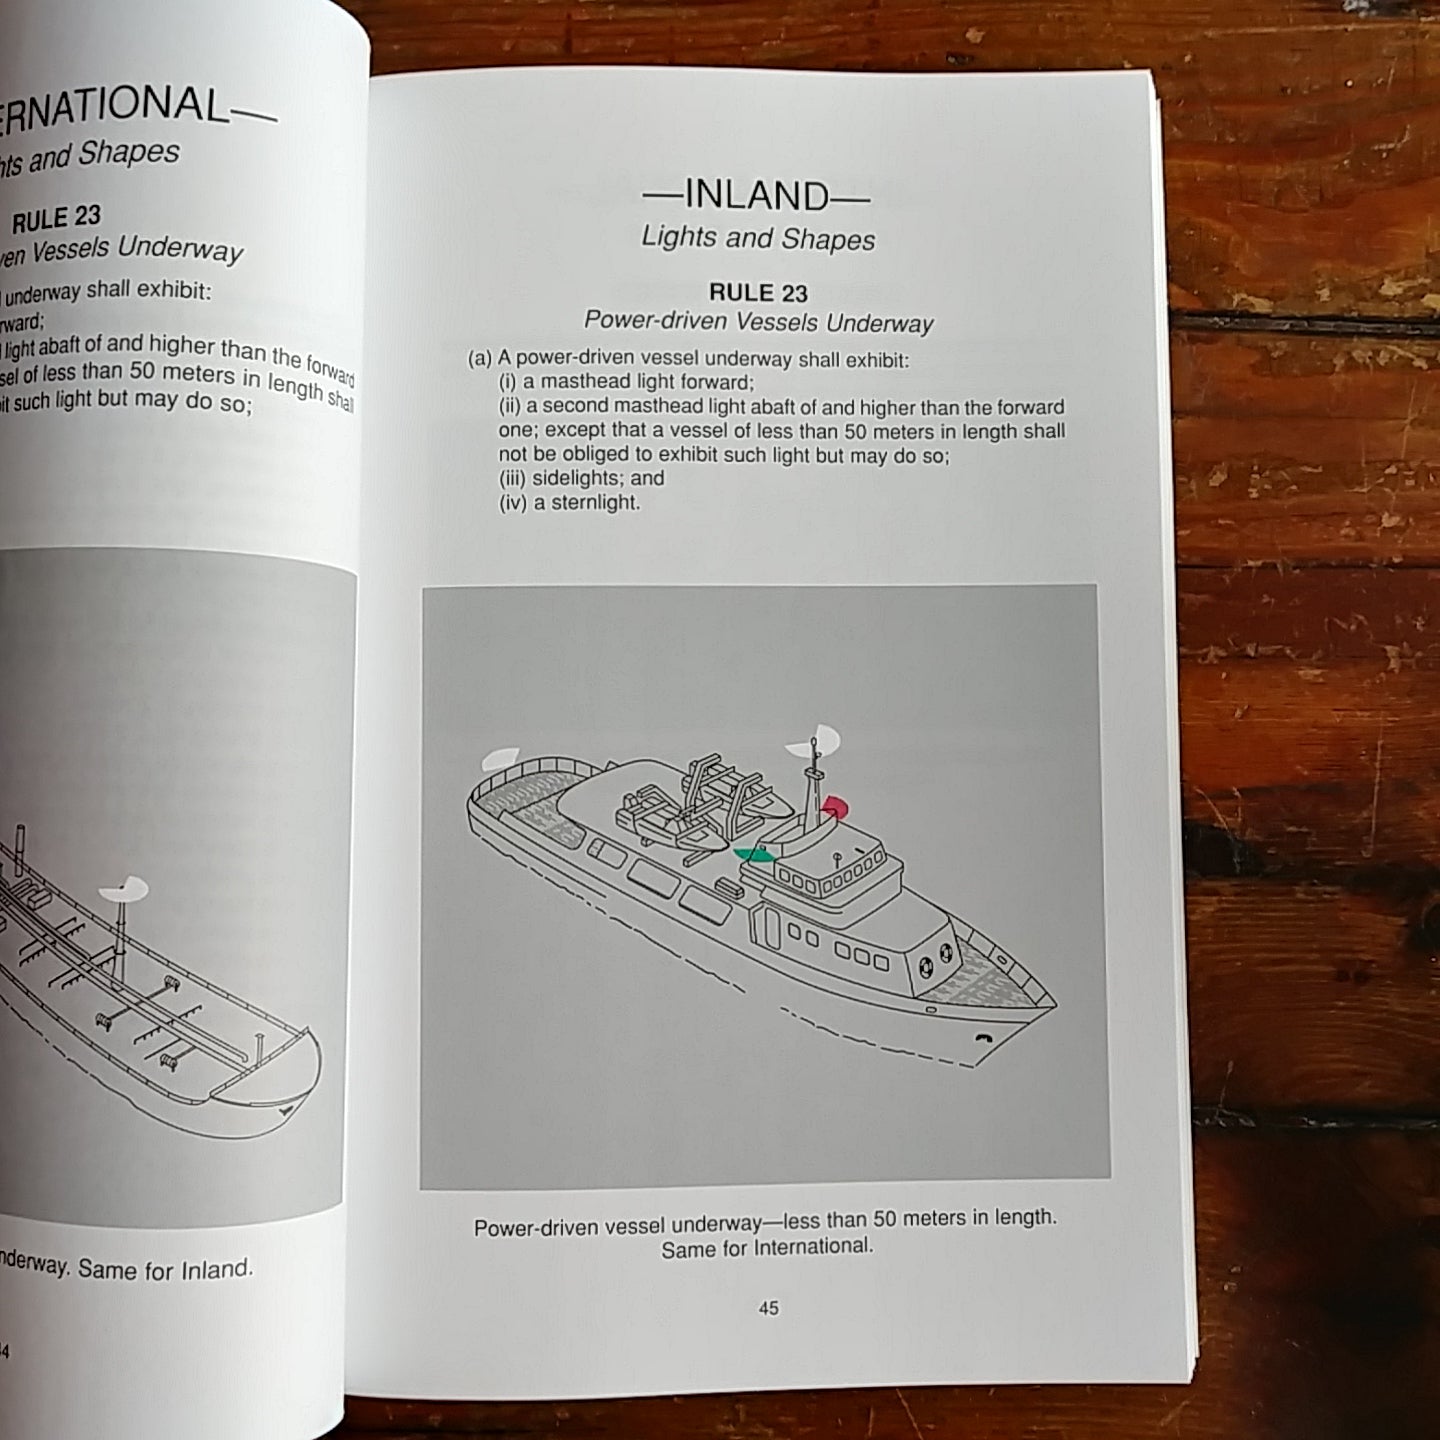 Book, "Navigation Rules - International-Inland - U.S. Dept. of Transp. U.S. Coast Guard